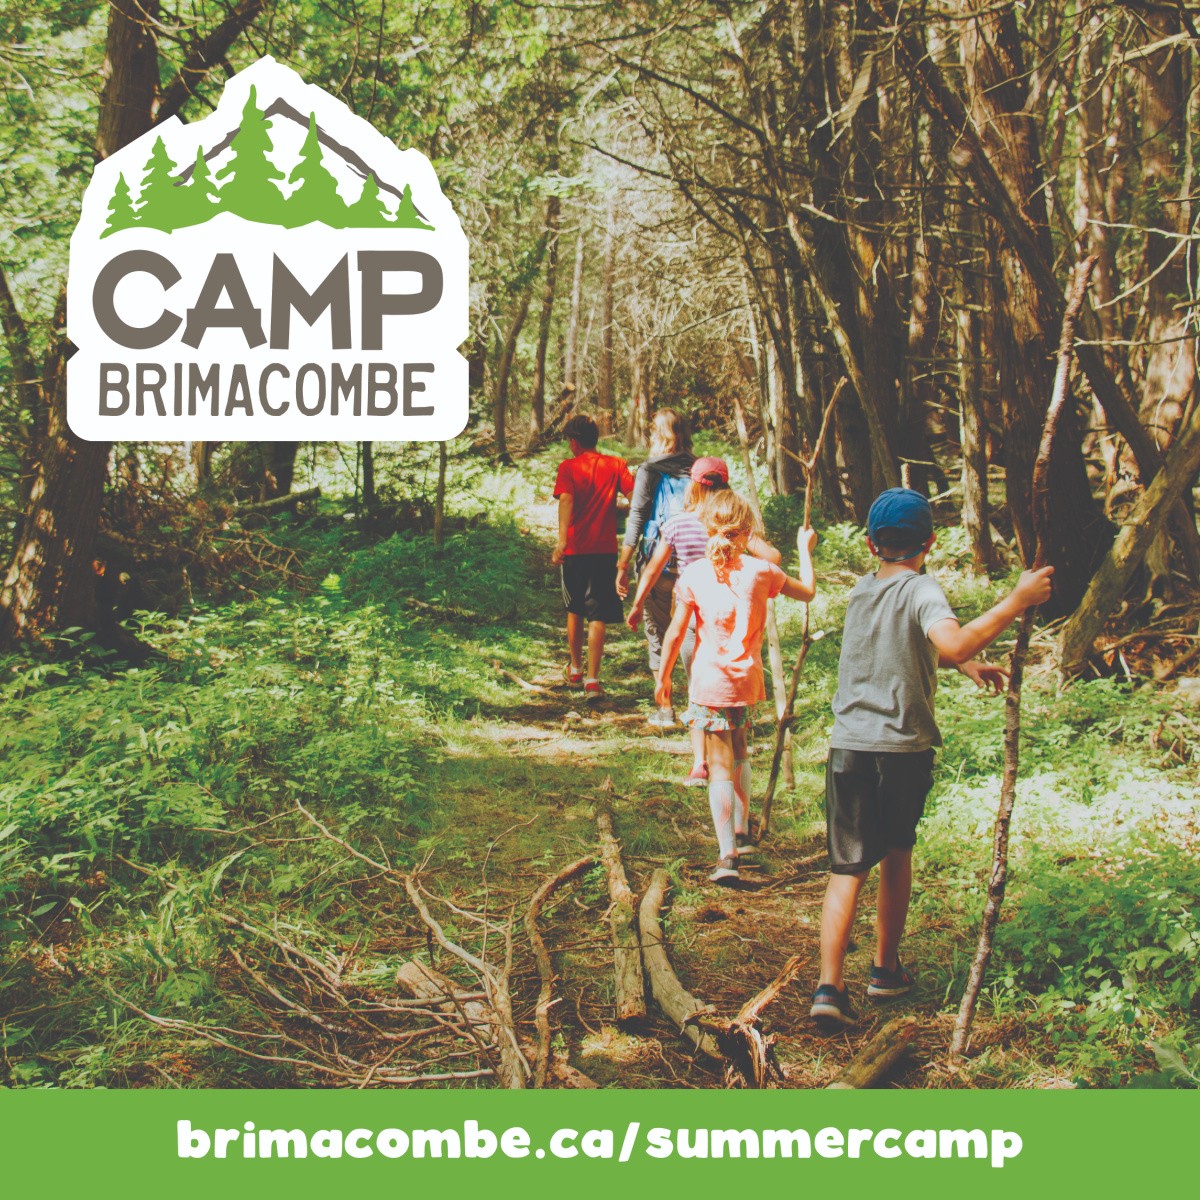 Camp Brimacombe Summer Camp